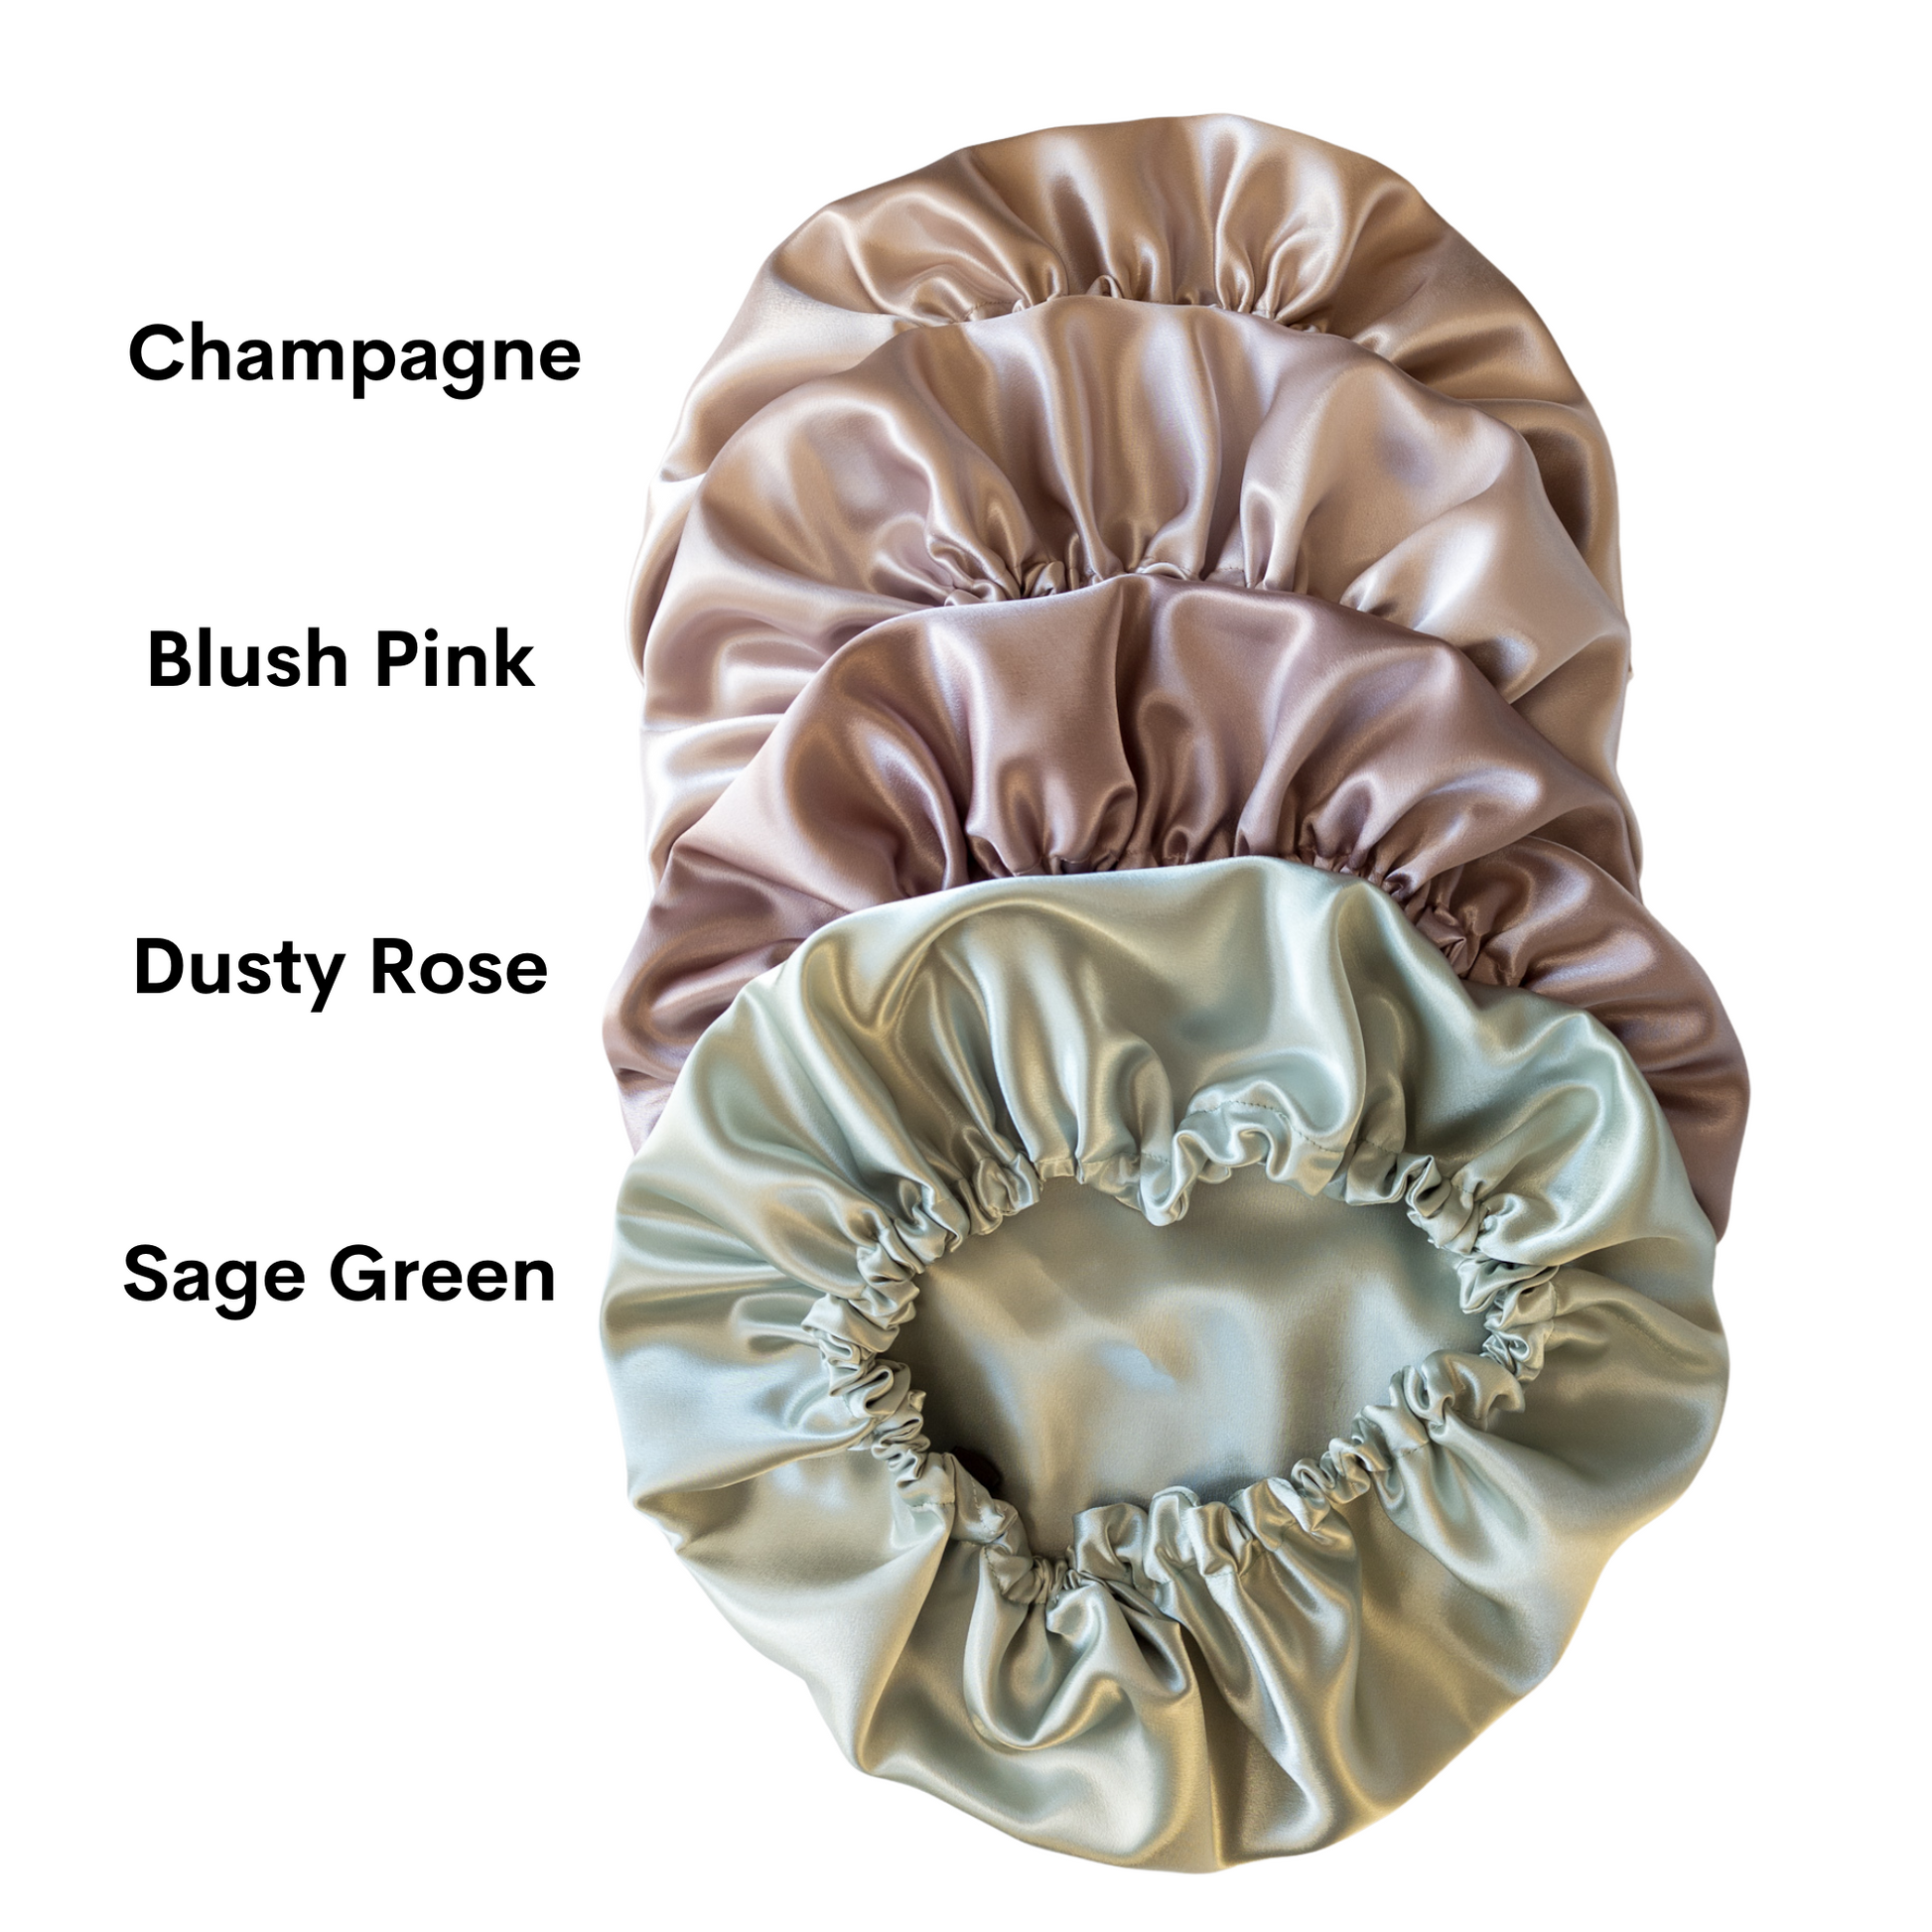 Silk Satin Hair Bonnet for Sleeping - Adjustable and Reversible